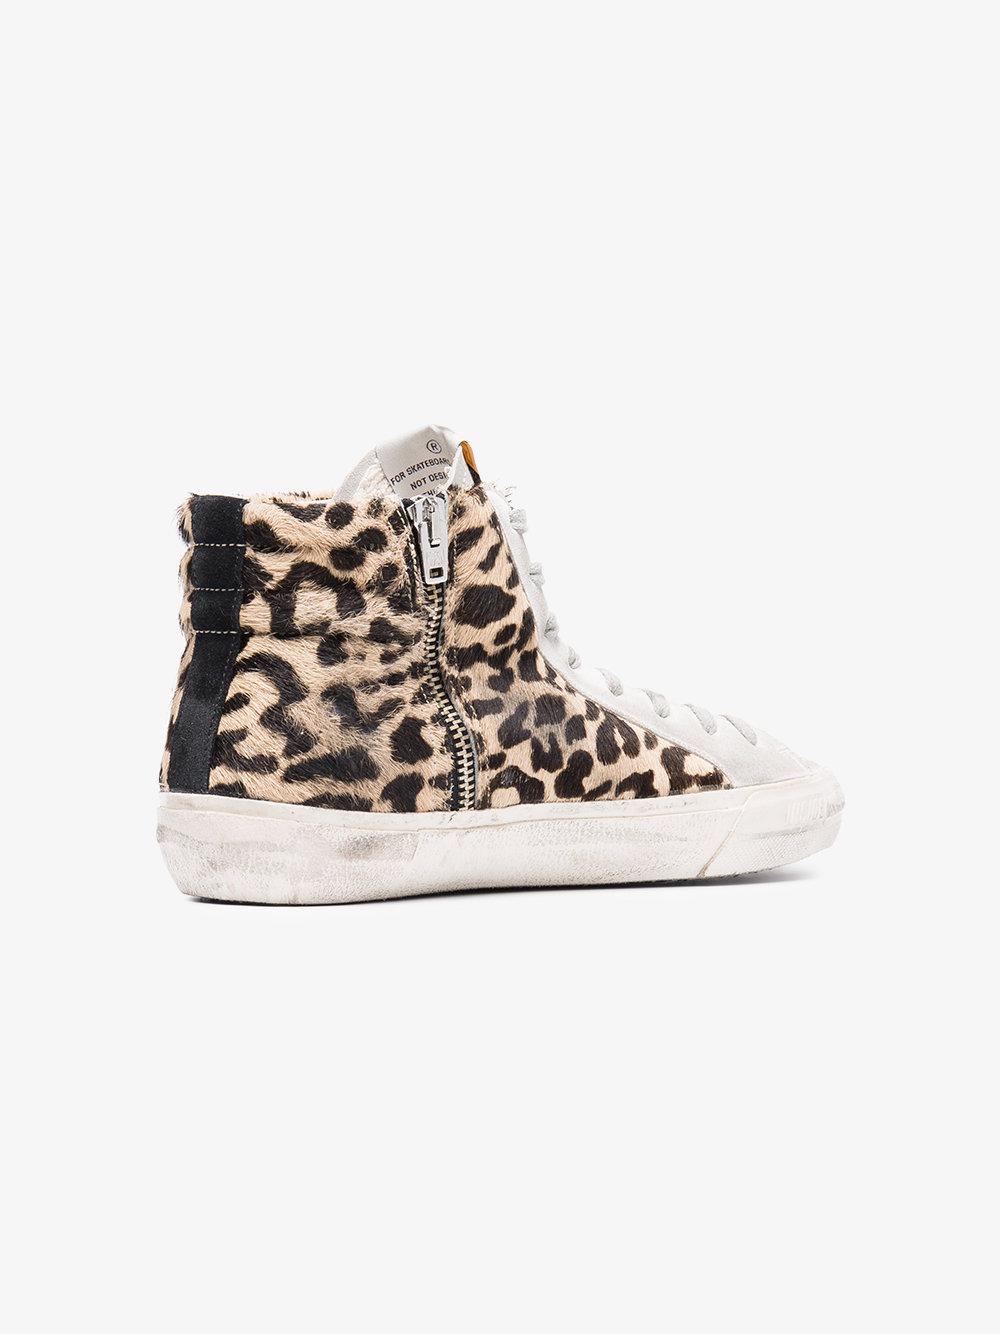 Golden Goose Slide Pony Skin Leopard Print High-top Sneakers in Brown | Lyst